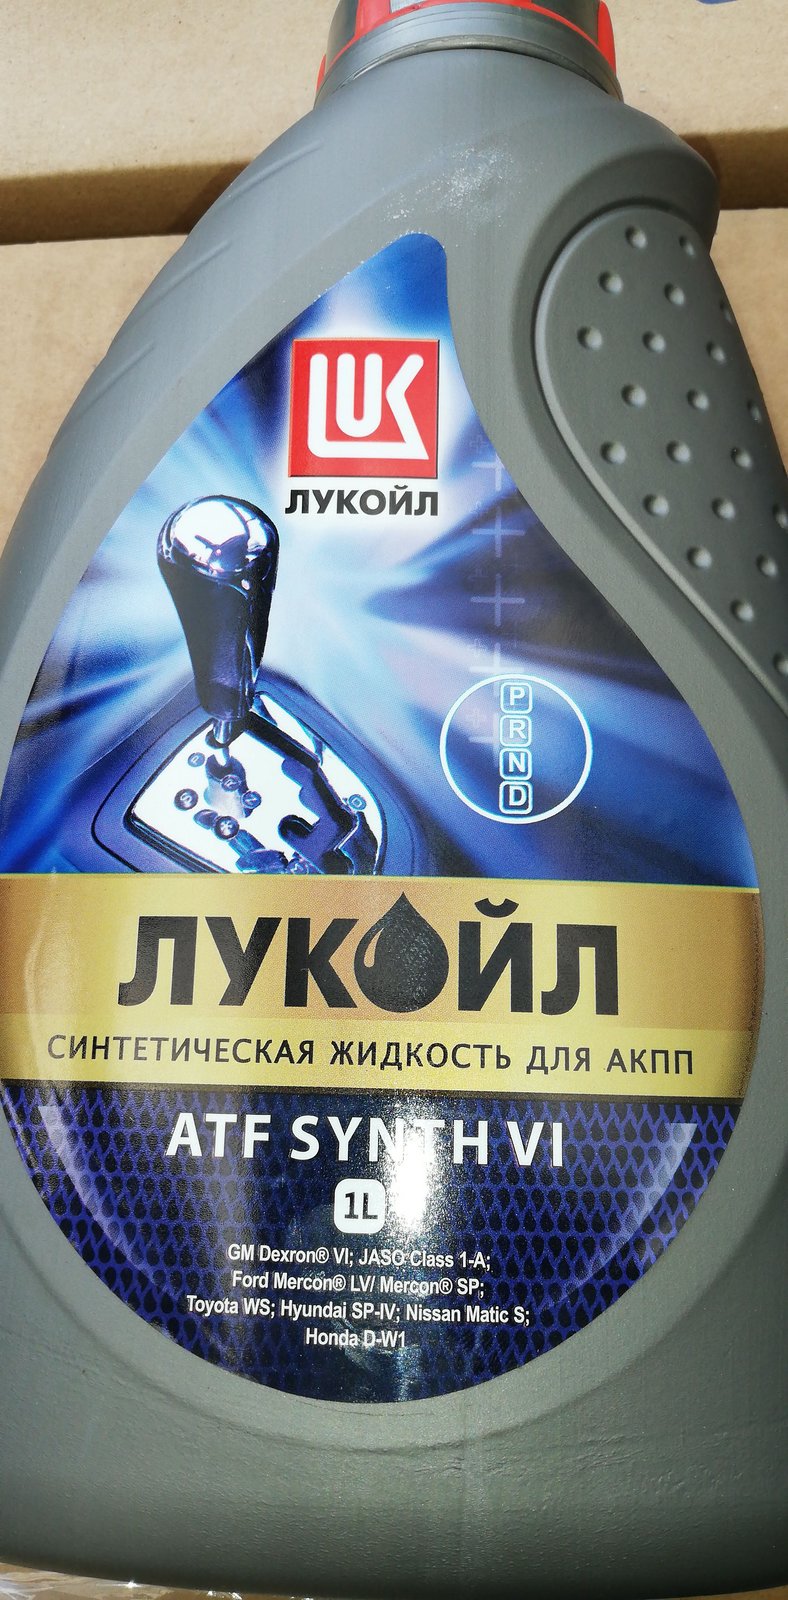 Atf synth vi. Лукойл ATF Synth vi. Лукойл АТФ декстрон 4. ATF 6 Lukoil. Лукойл АТФ 6 для АКПП.